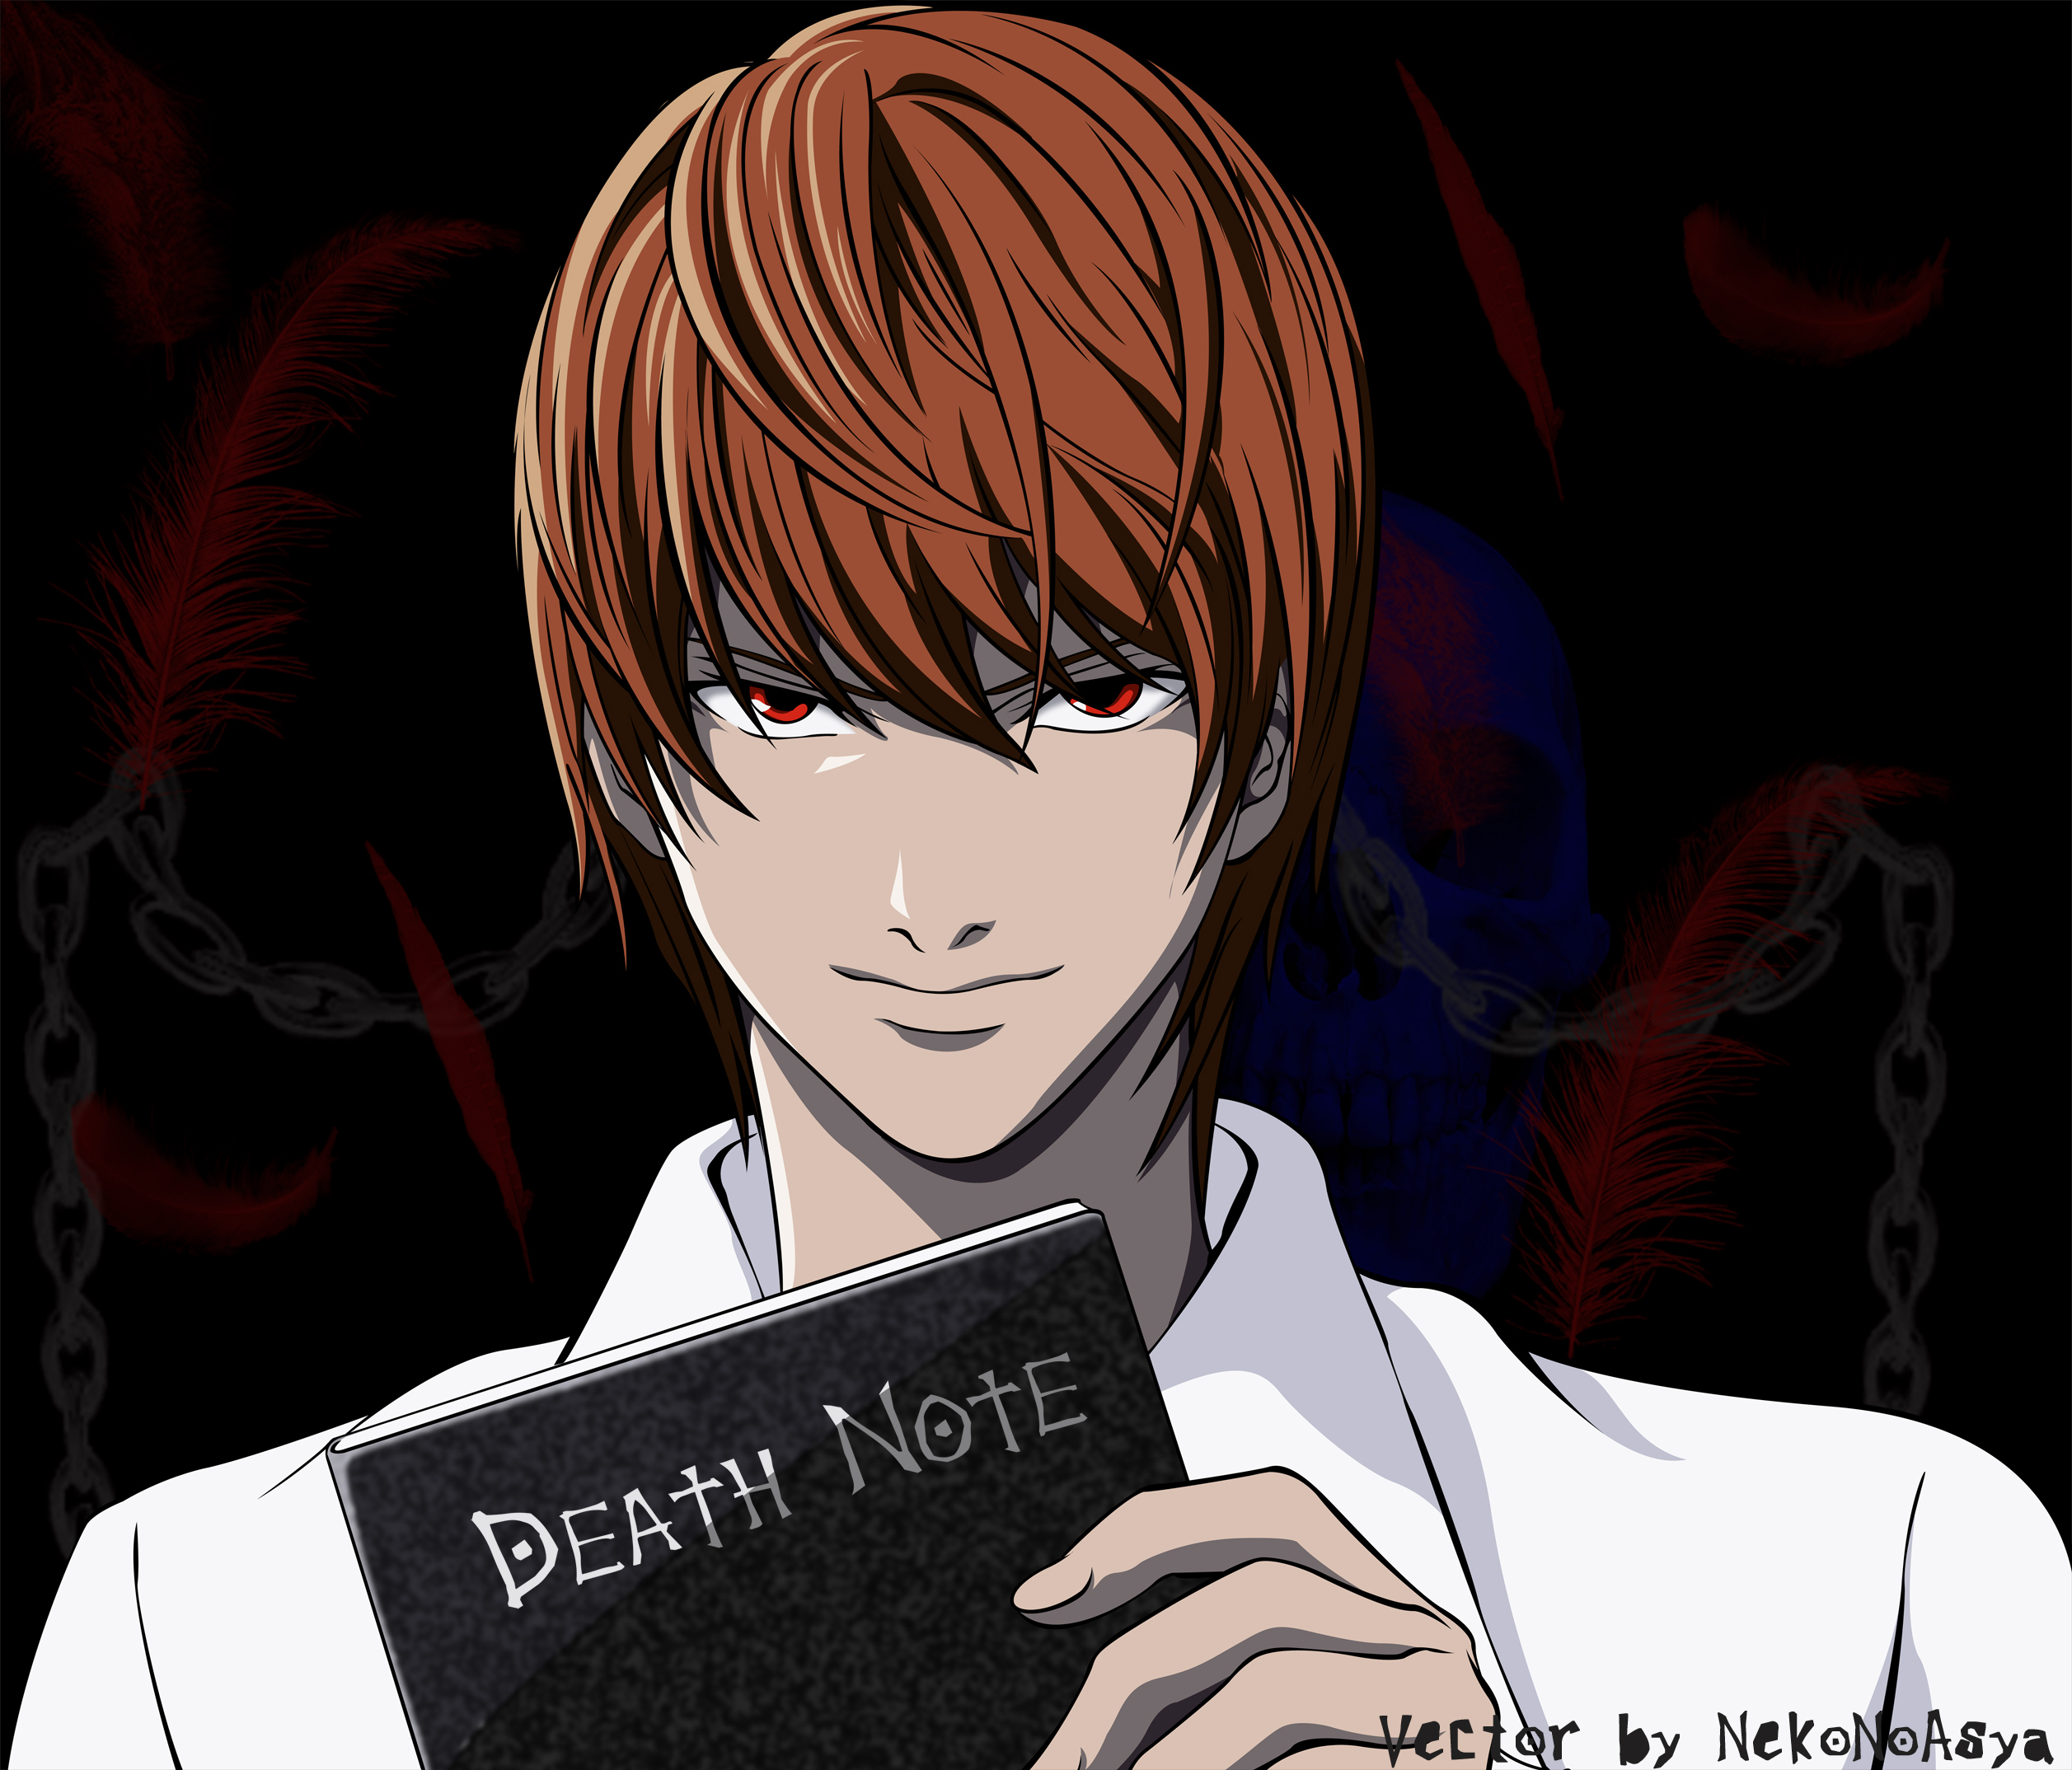 Daniel M Cartoons My top 5 Death Note characters